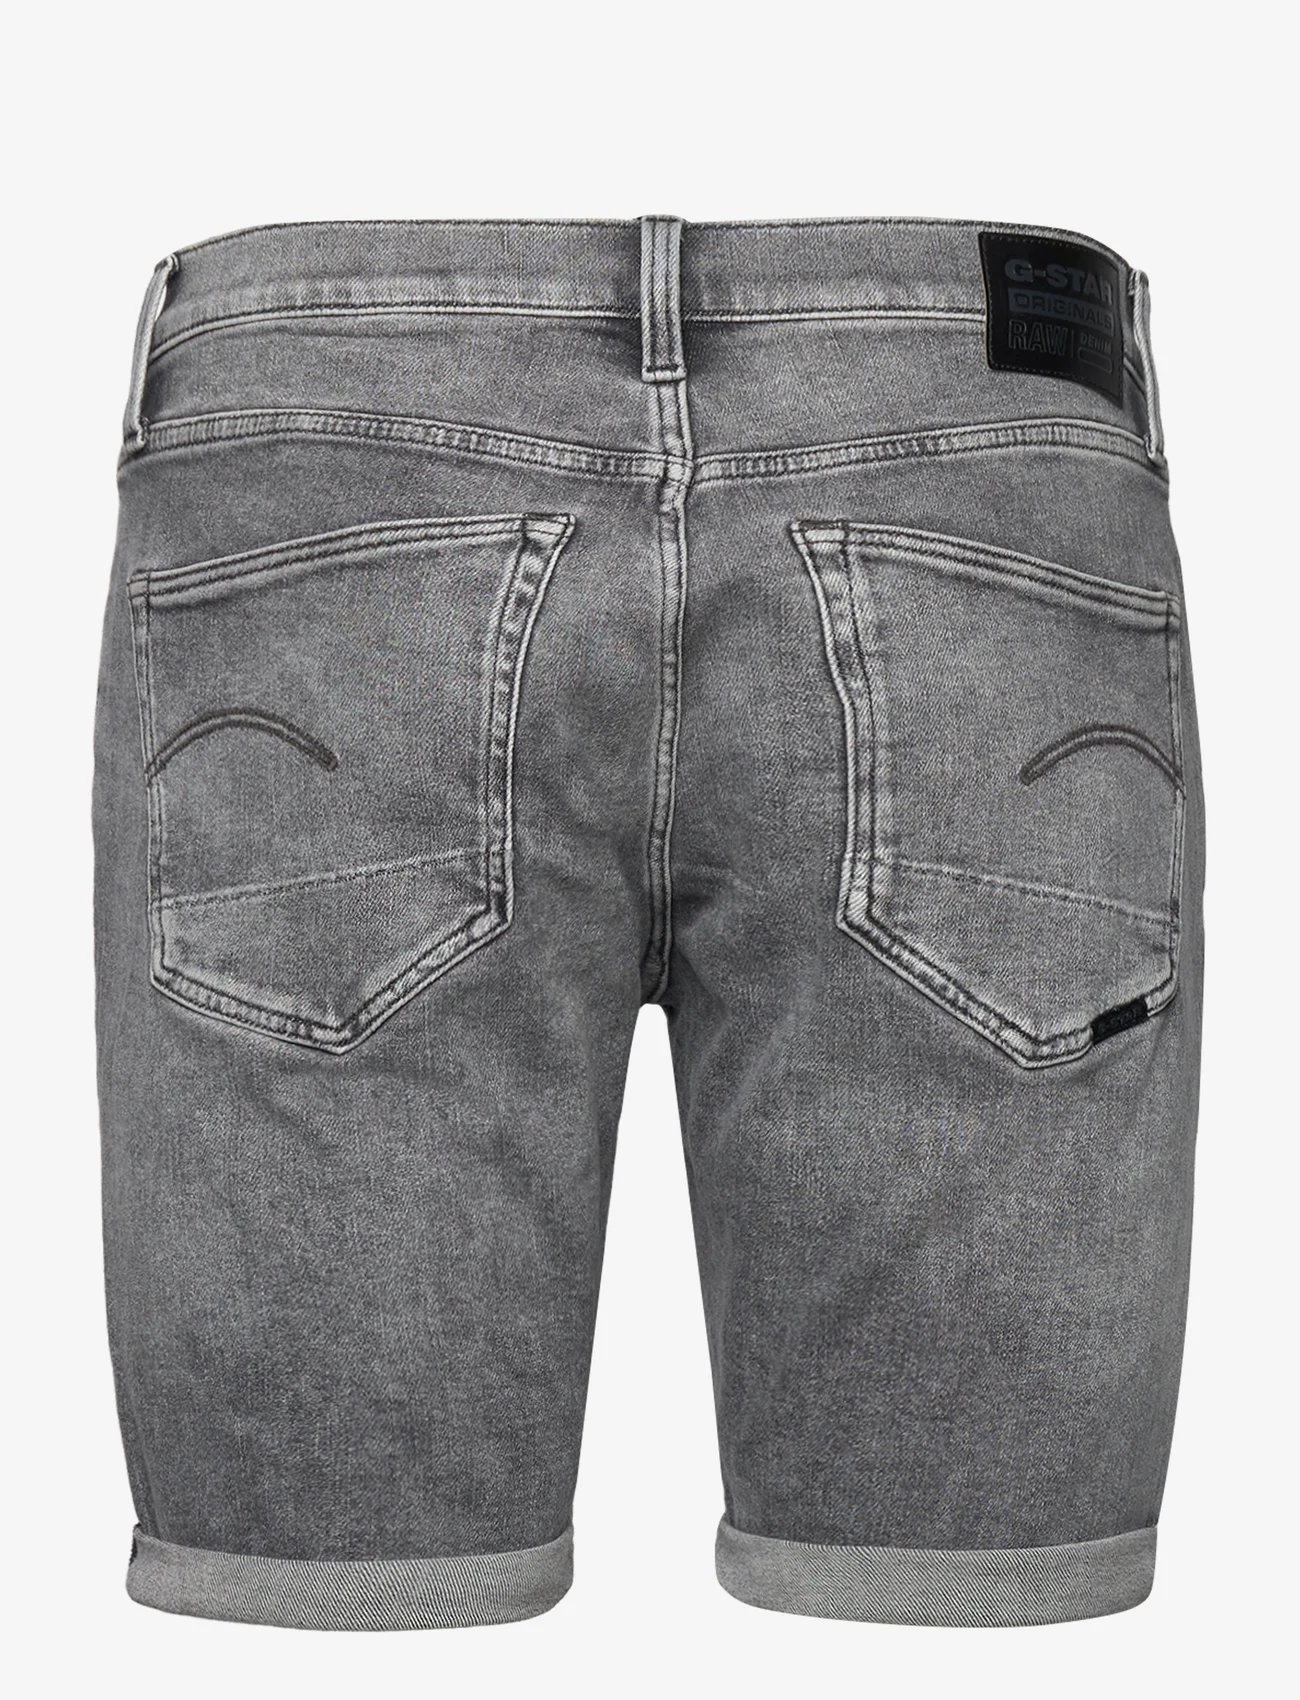 G-Star RAW - 3301 Slim Short - jeans shorts - faded grey neblina - 1